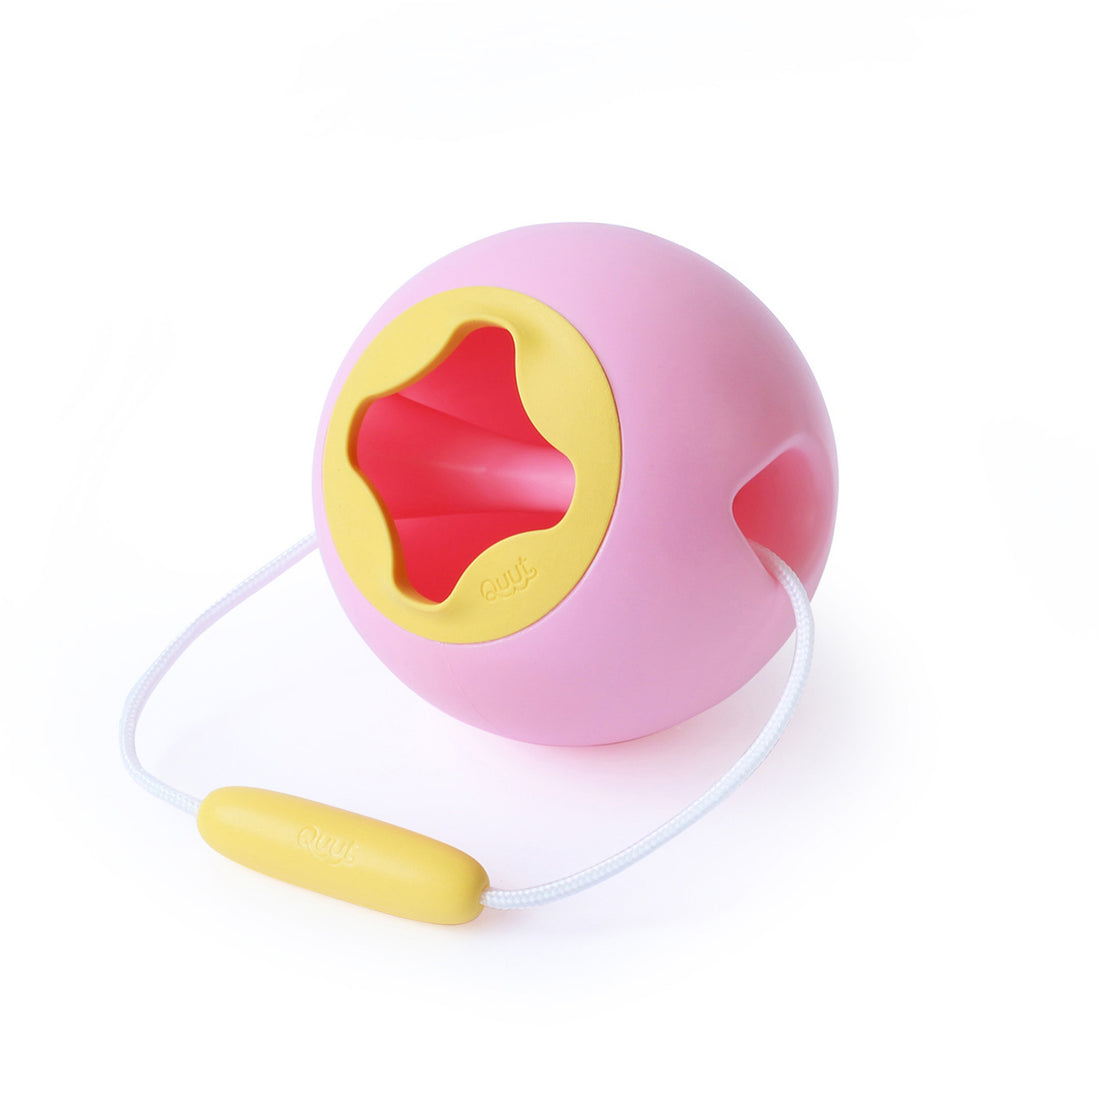 quut-mini-ballo-sweet-pink-yellow-stone- (1)